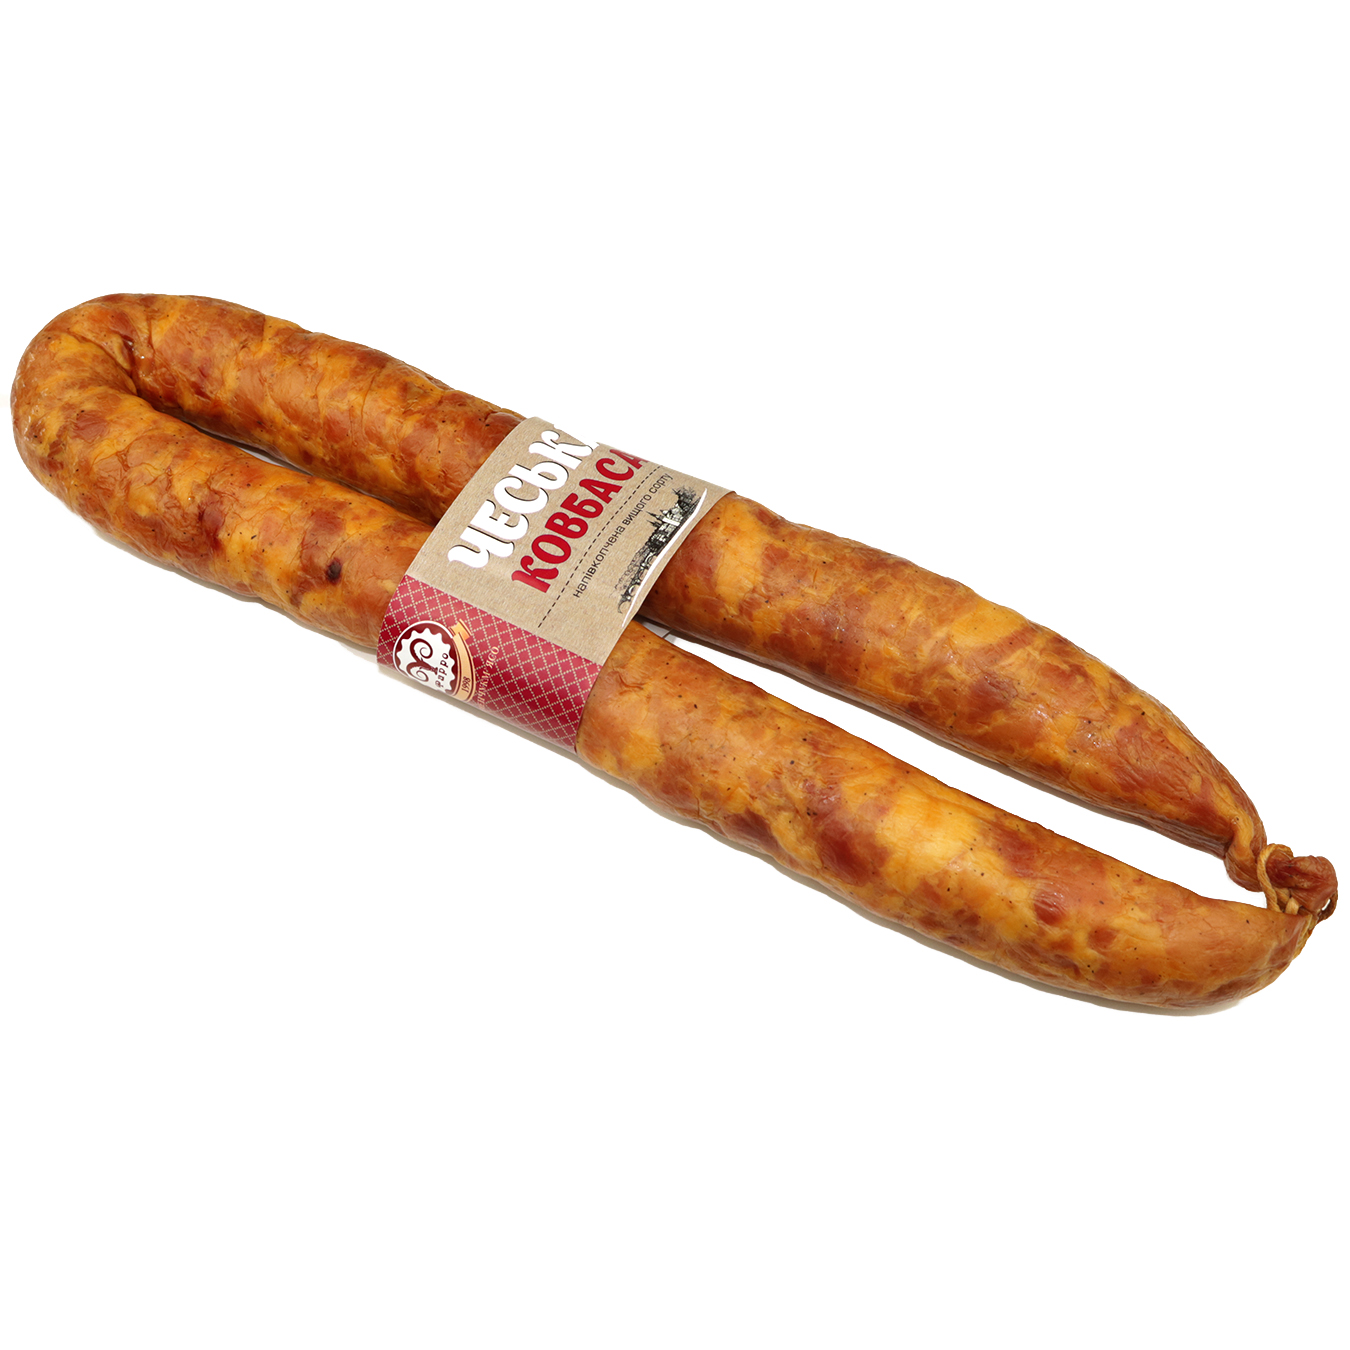 Farro Czech sausage half-smoked v/s 2